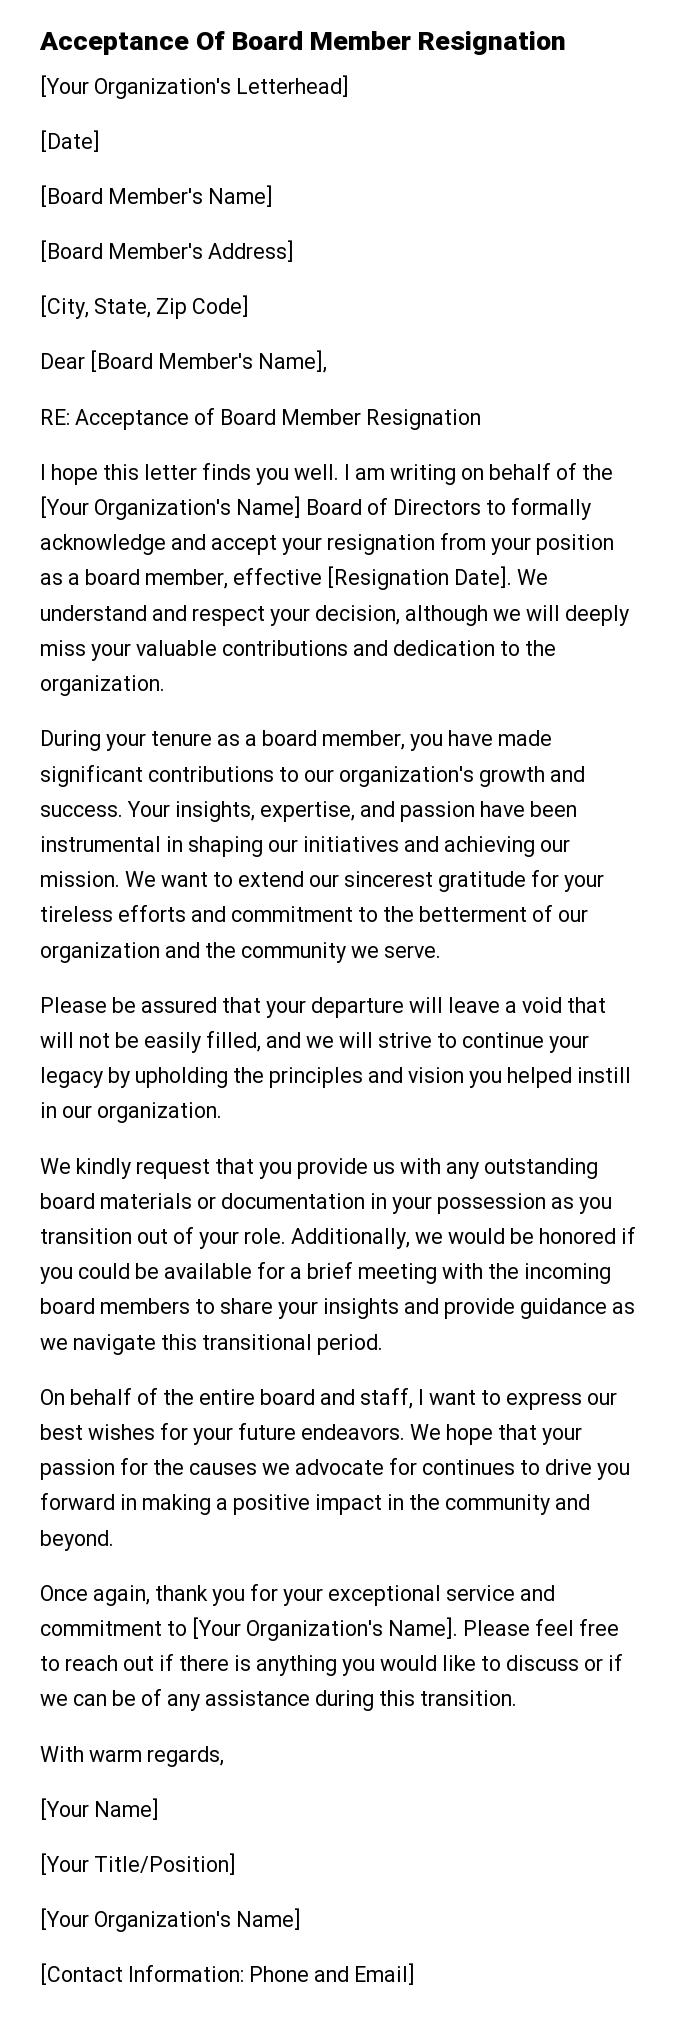 Acceptance Of Board Member Resignation